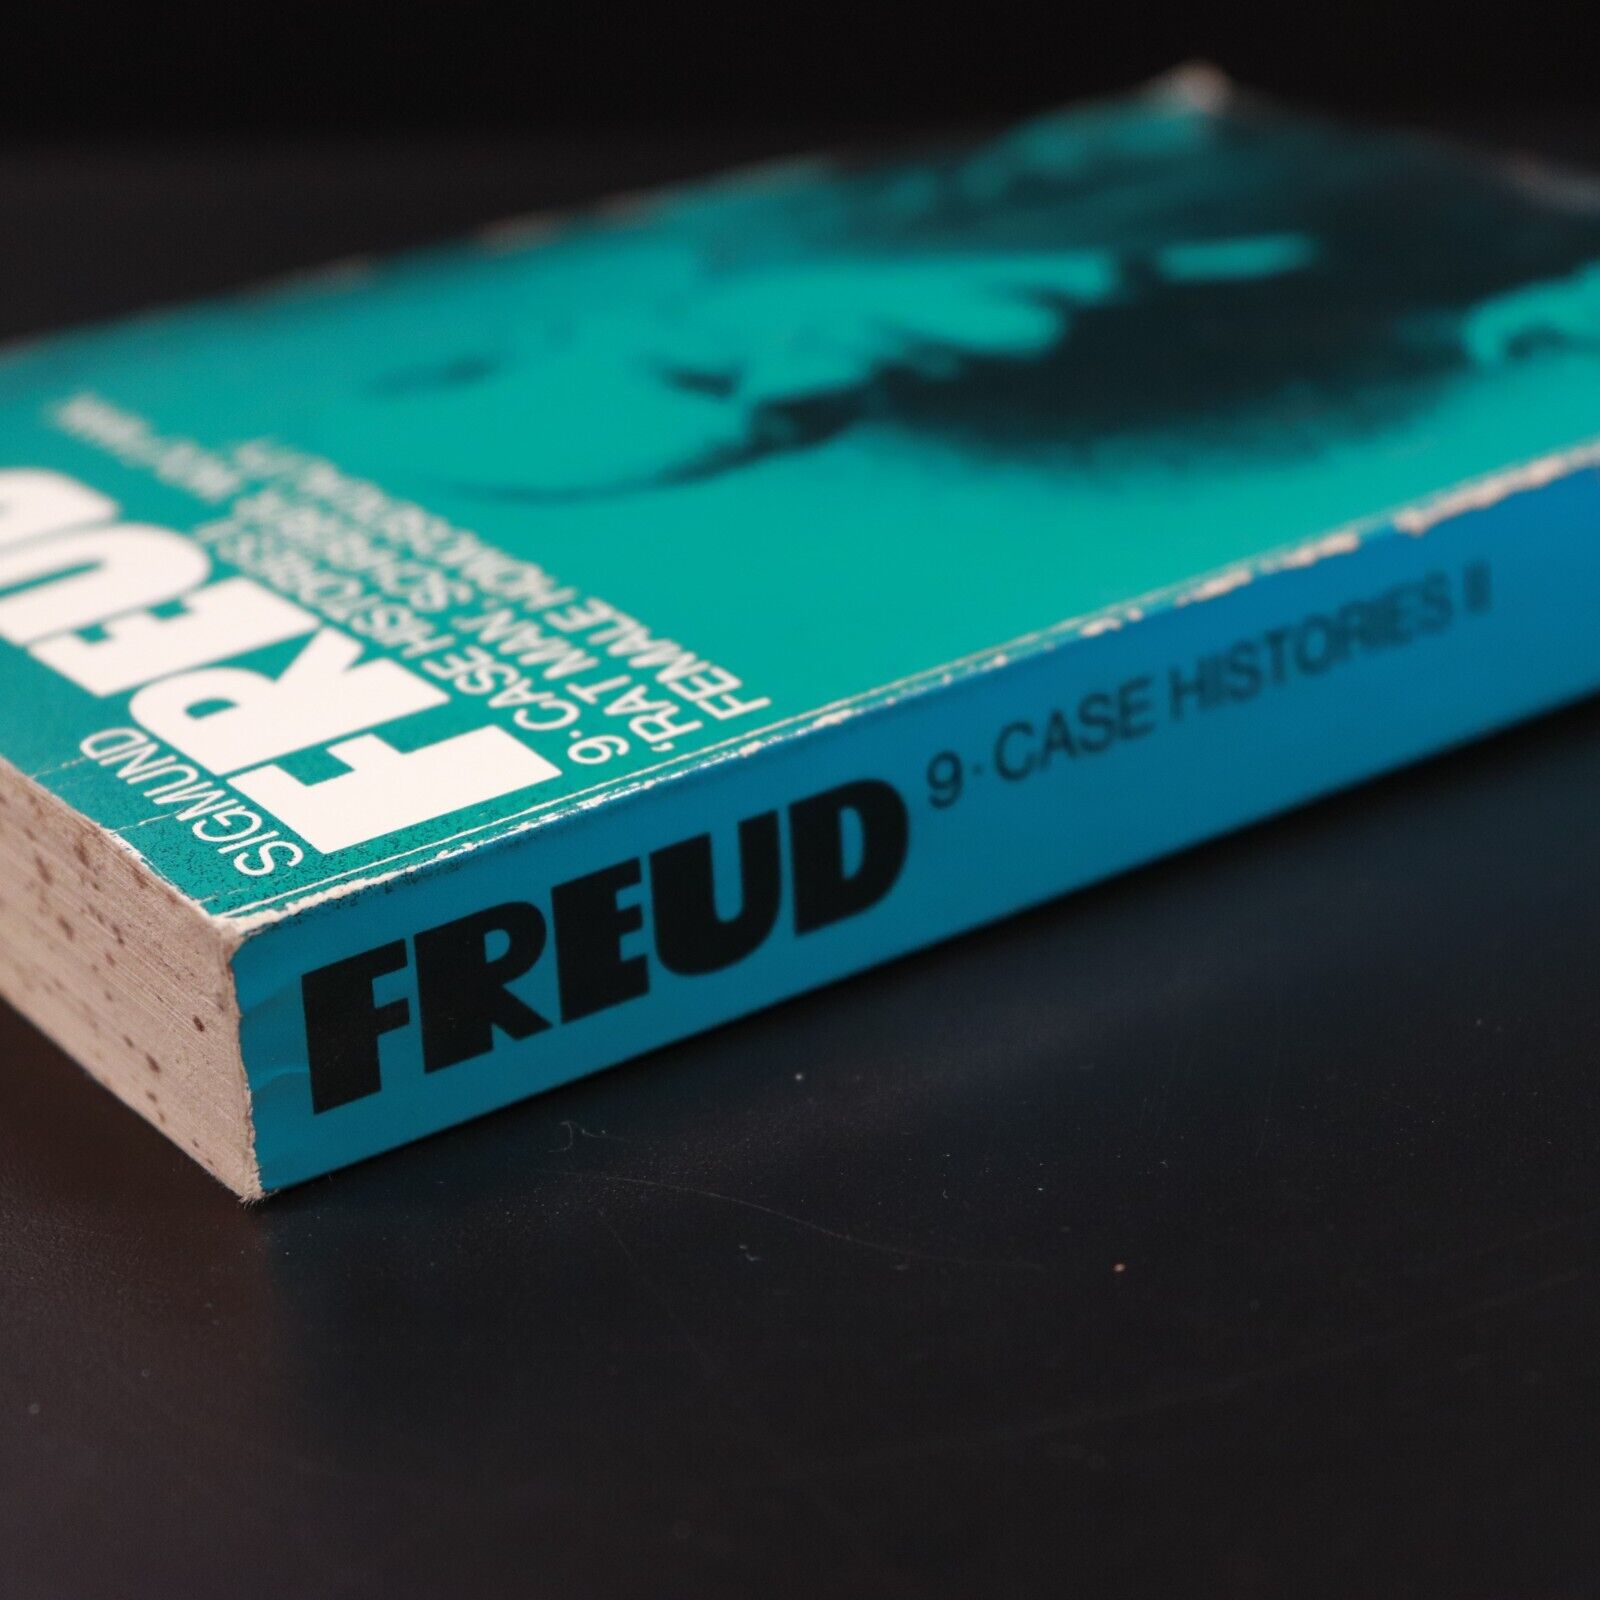 1979 Sigmund Freud Case Histories II Vintage Psychology Book Homosexuality